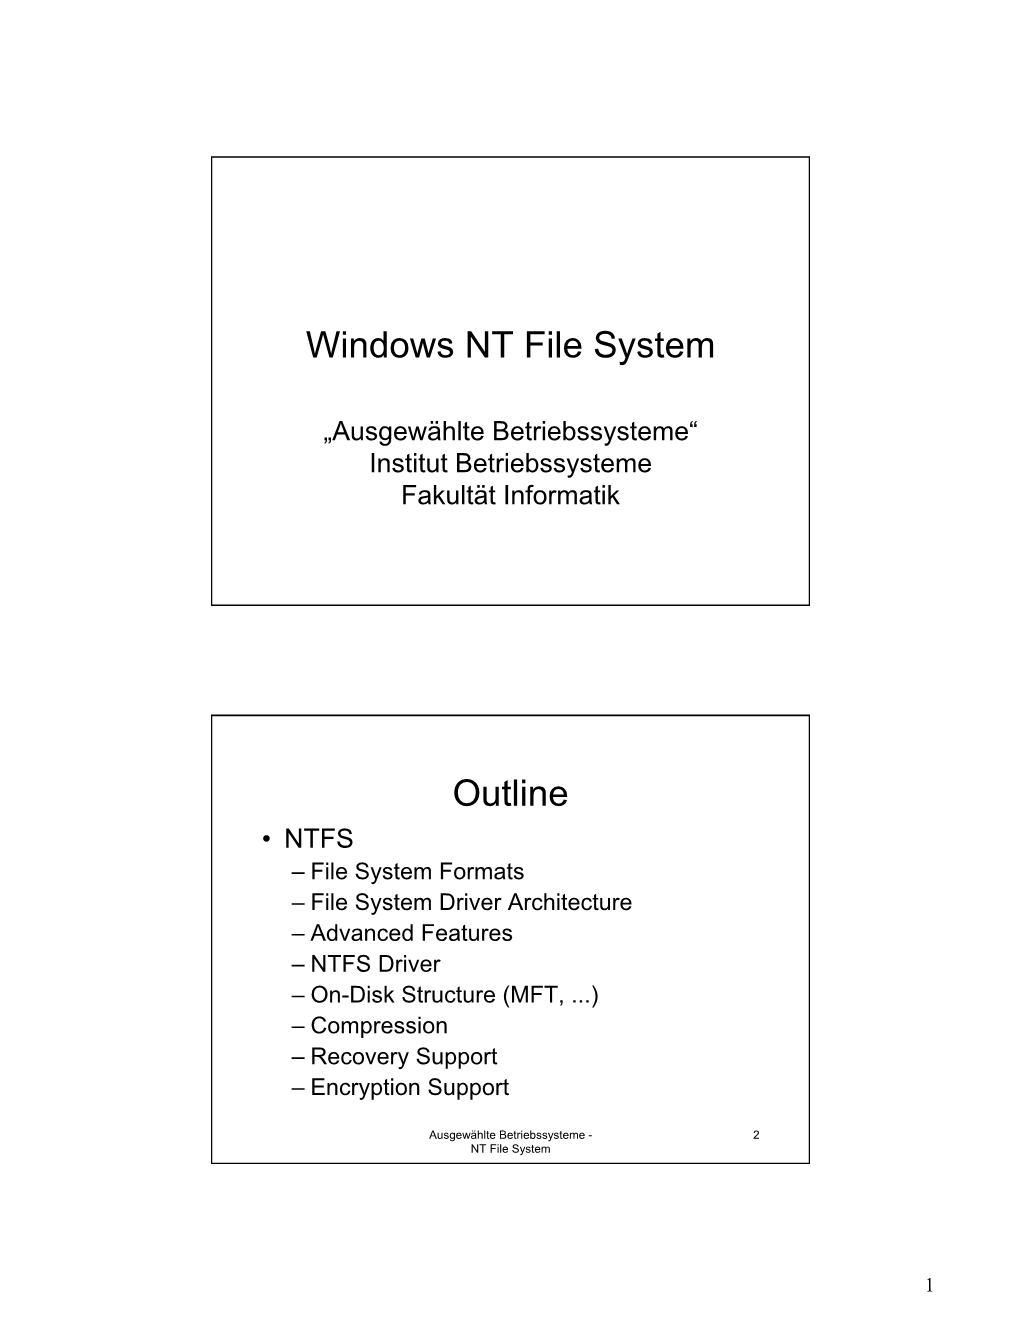 Windows NT File System Outline